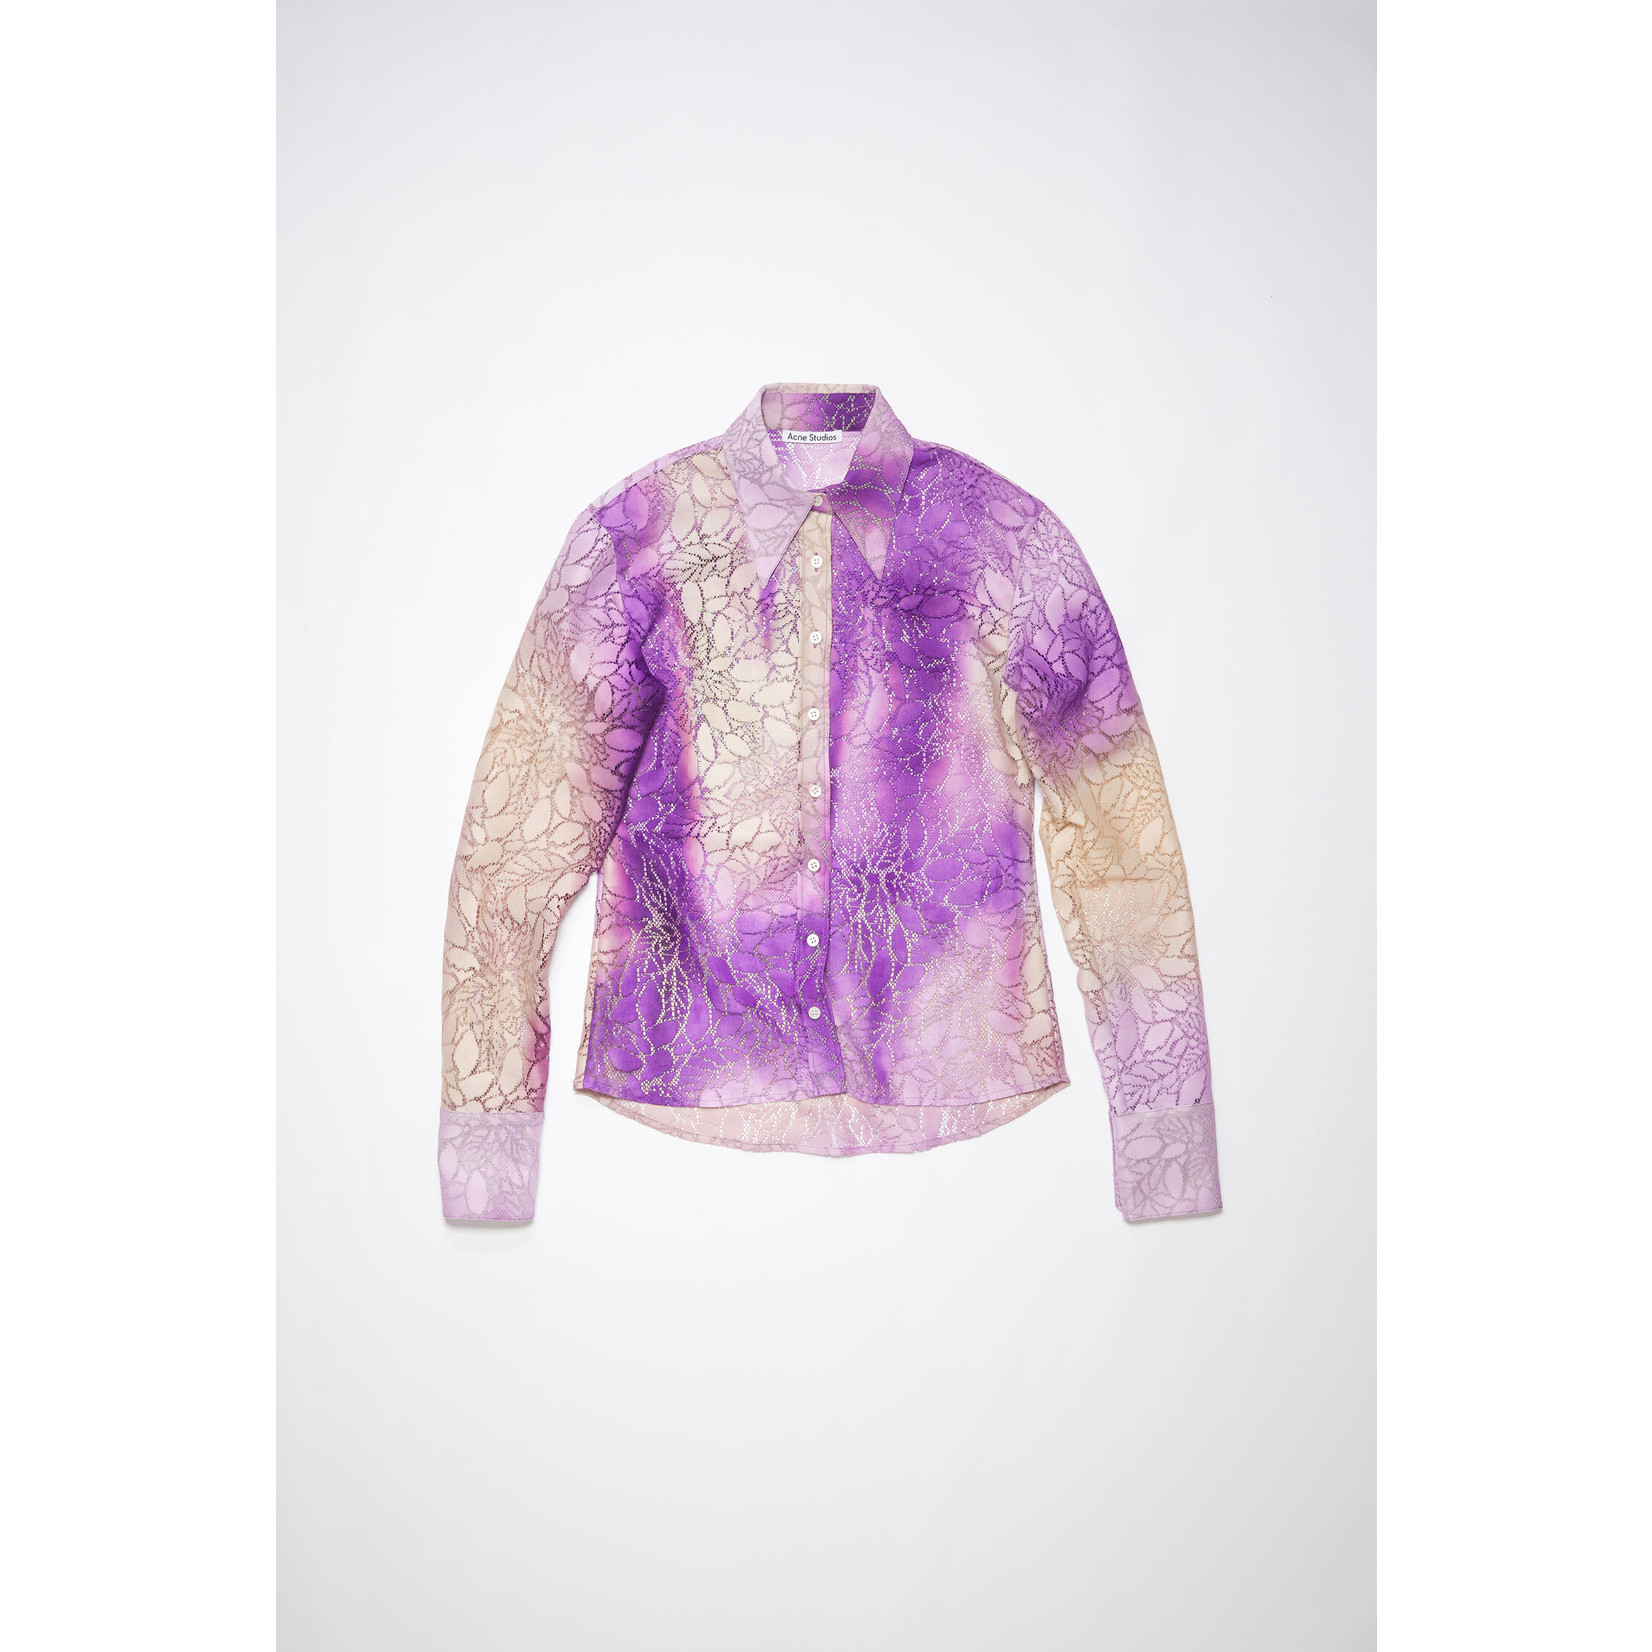 Acne Studios Acnestudios Lace shirt, purple